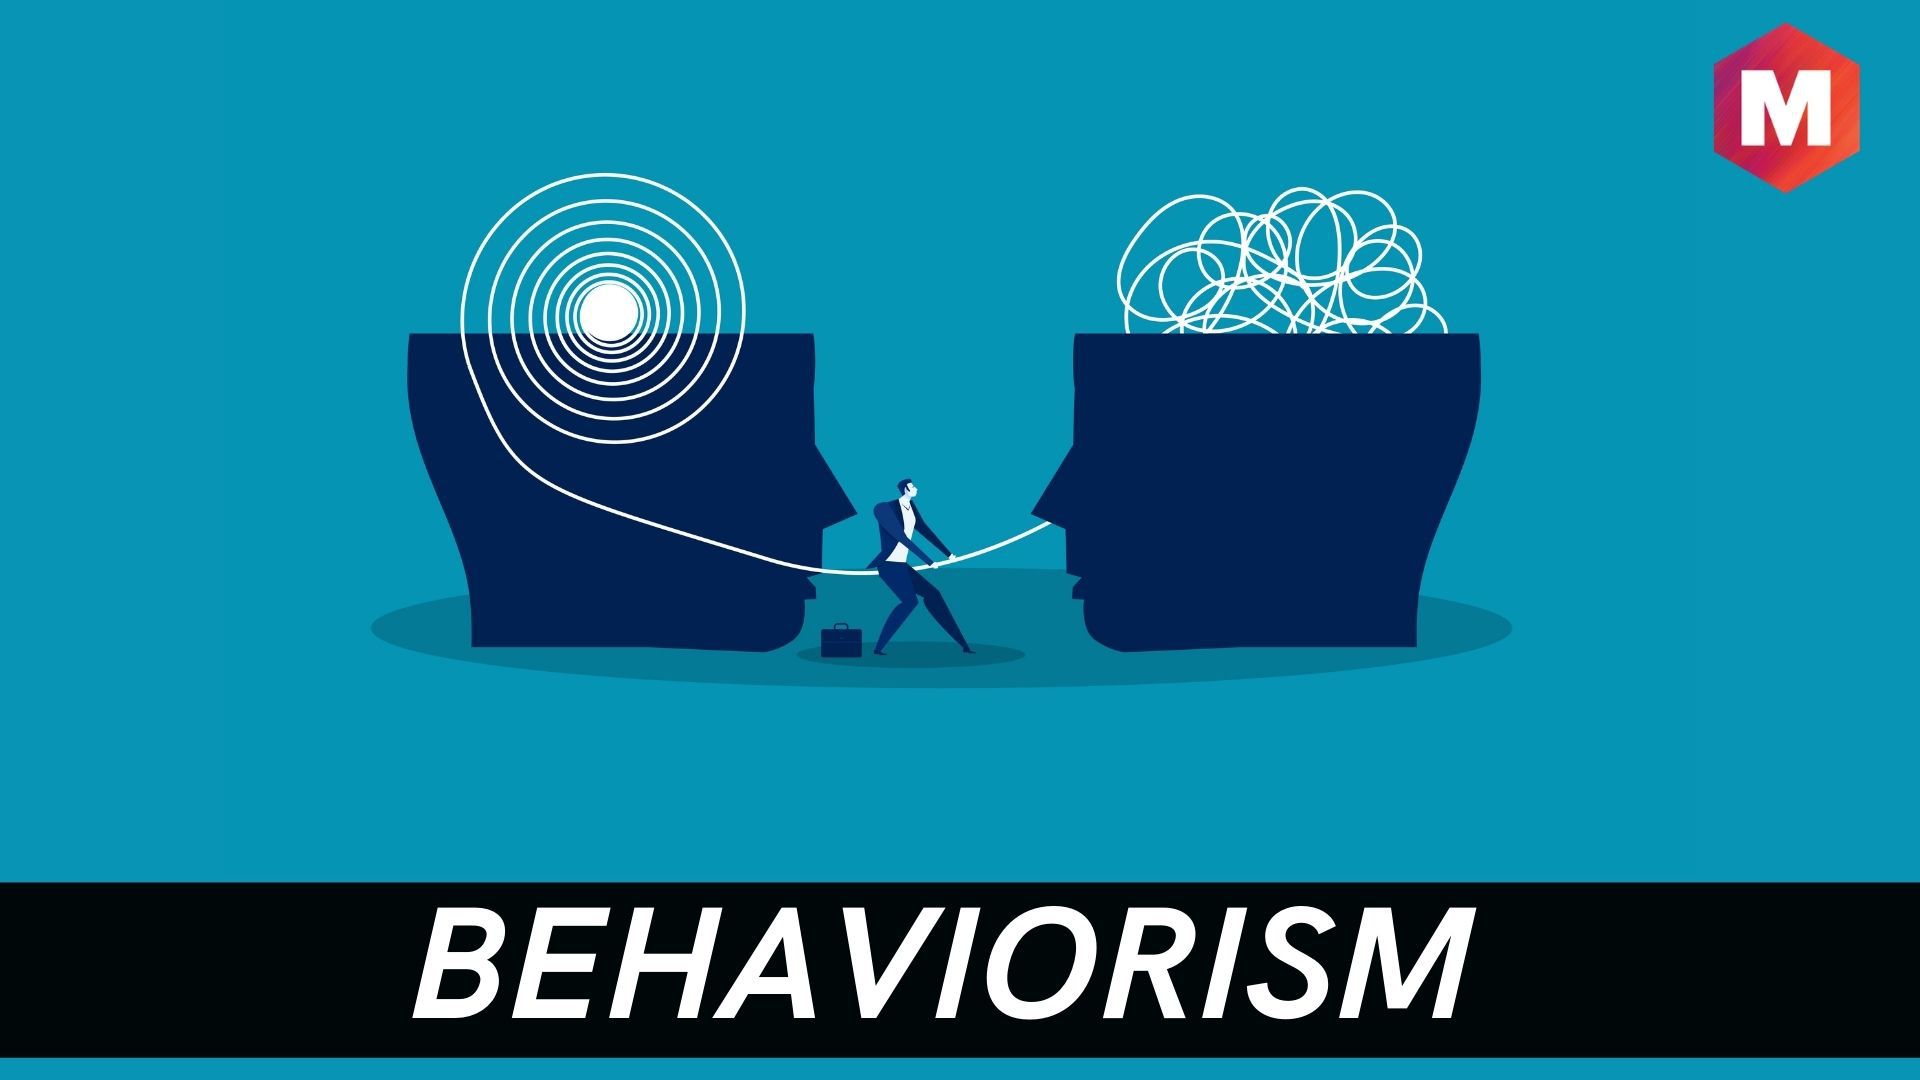 Behaviorism - Types and Concept of Behavioral Psychology | Marketing91